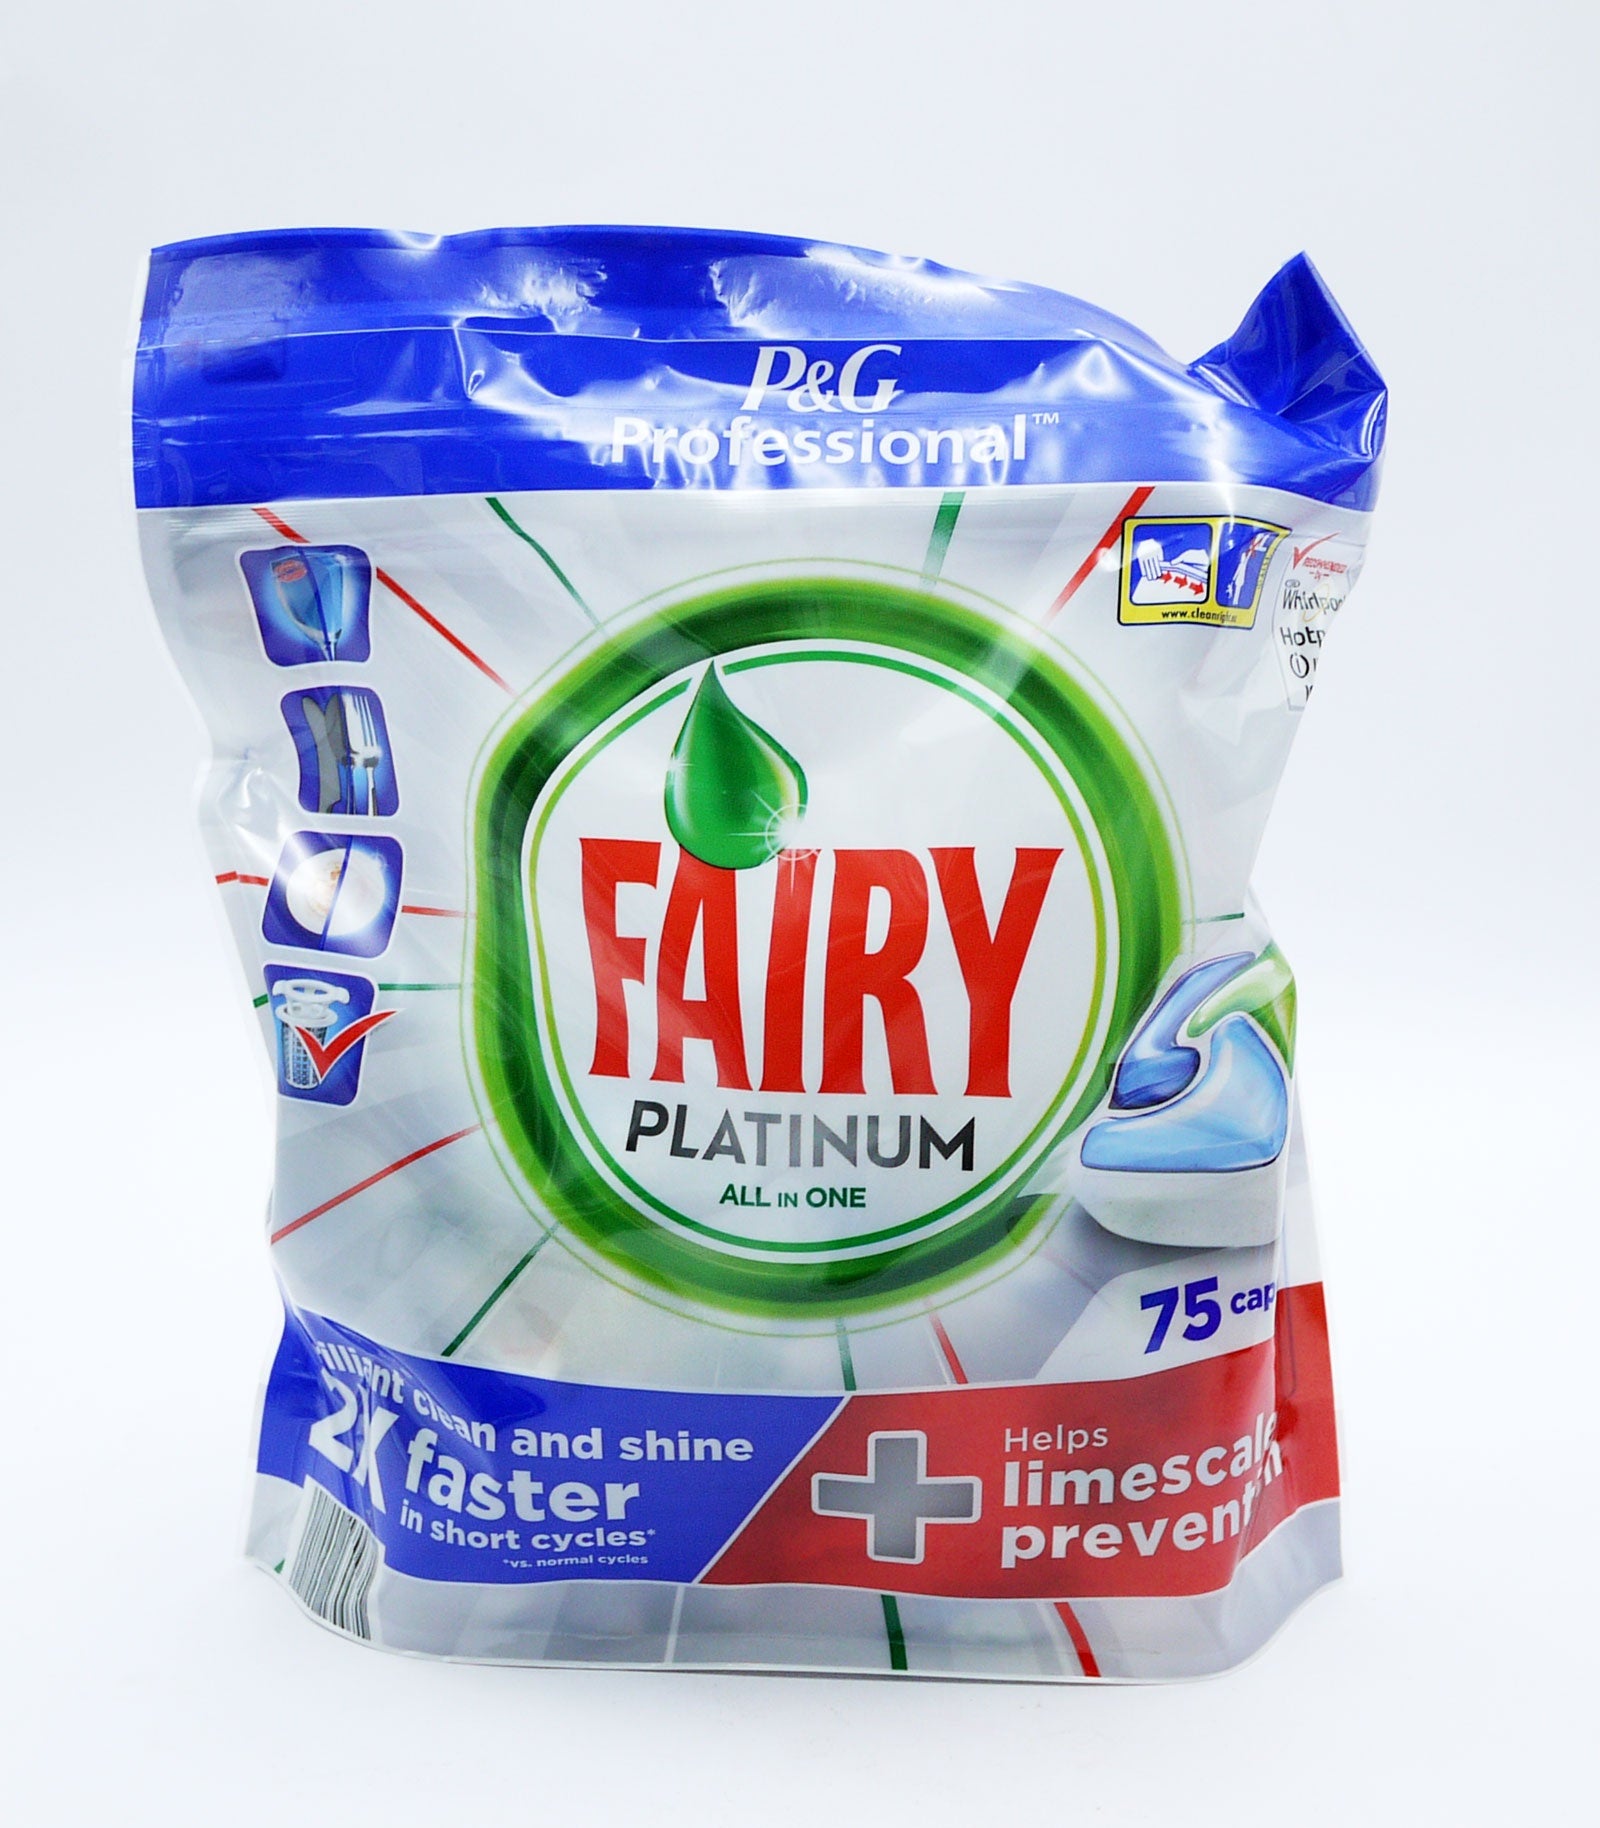 Fairy Platinum AIO Dishwasher Tablets (75)*